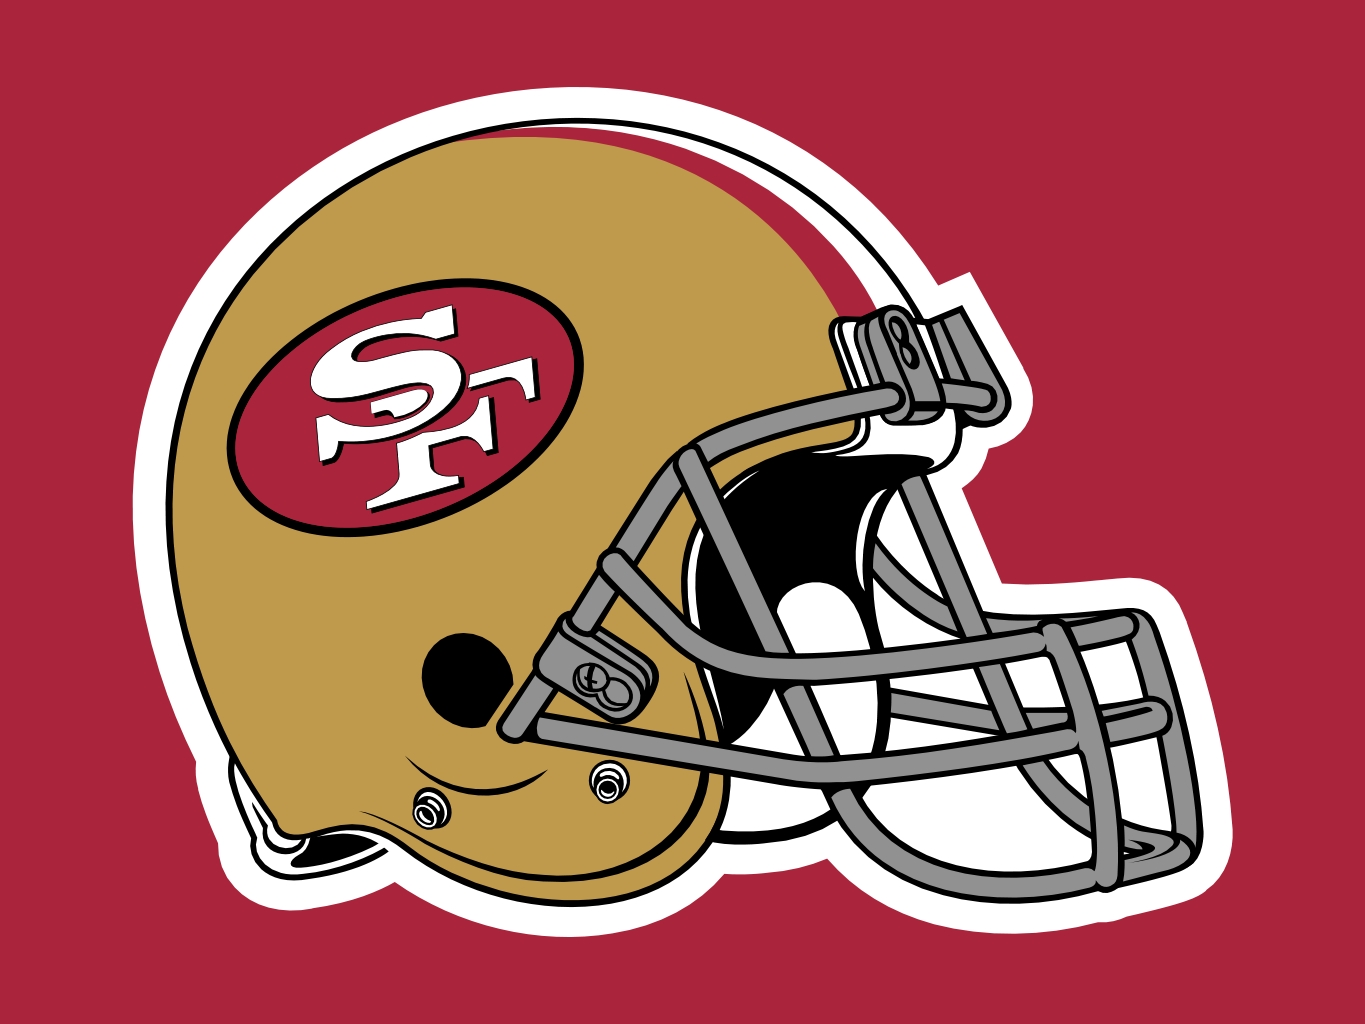 Download 21 49er-logo-pics 49ers-Logo-Drawing-at-PaintingValley.com-Explore-.jpg